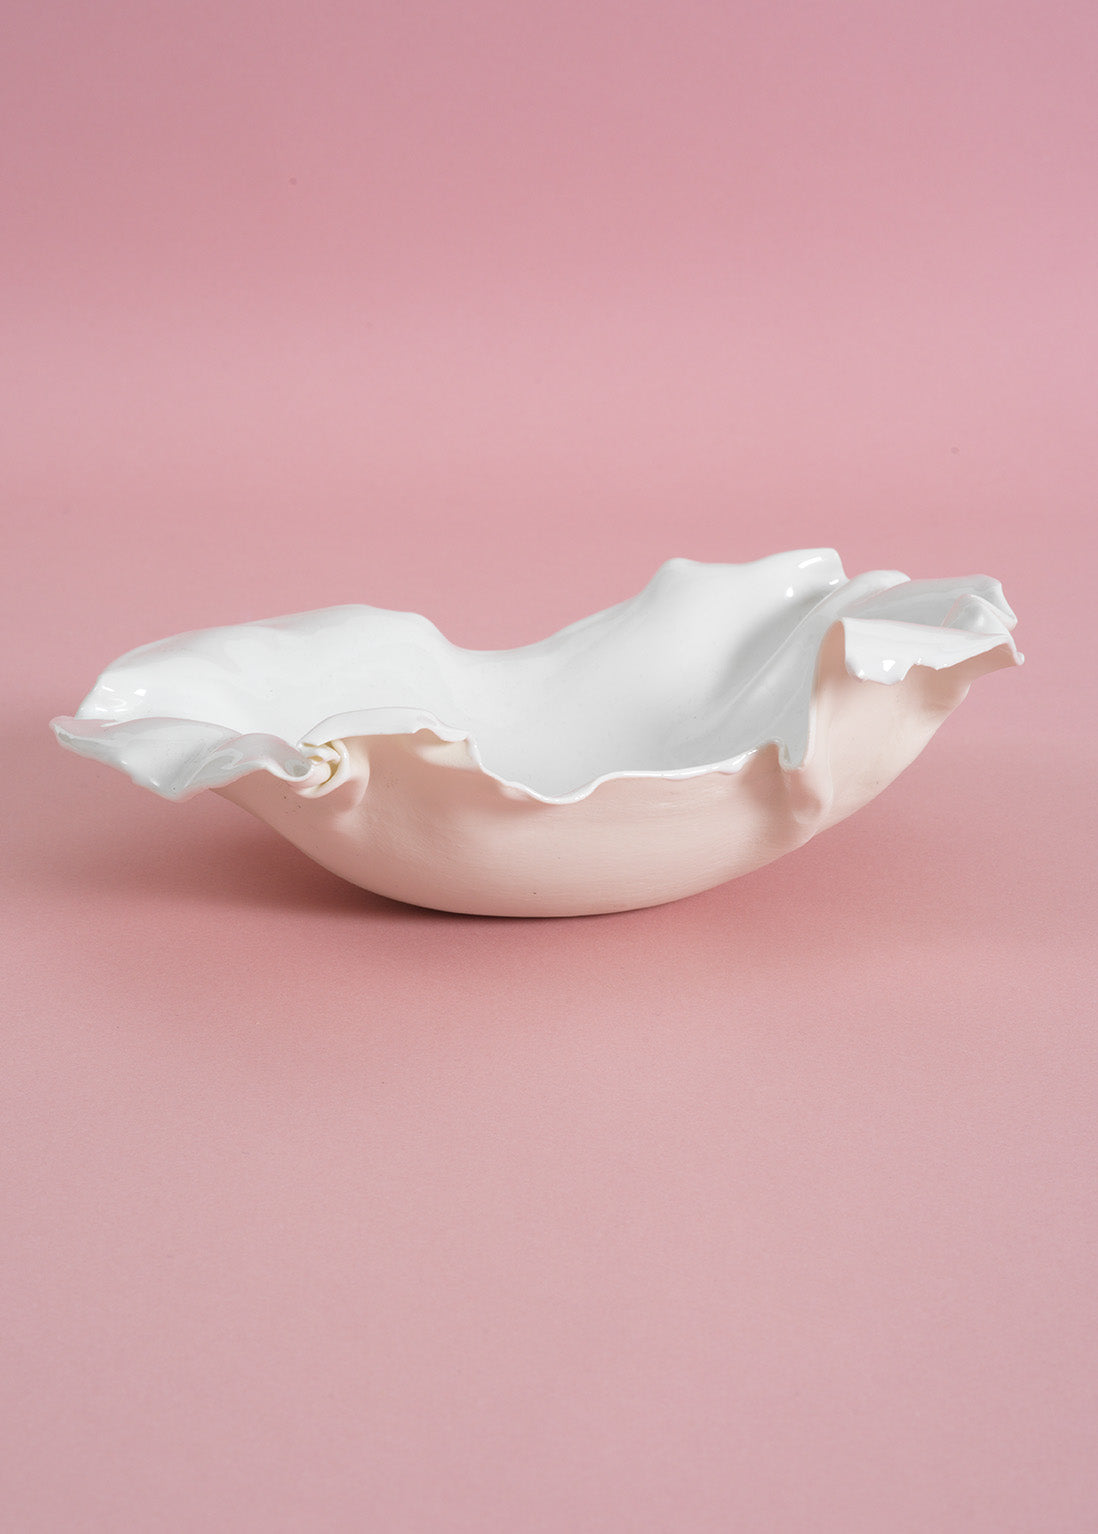 Christine Roland, ‘White porcelain petal’, 2019